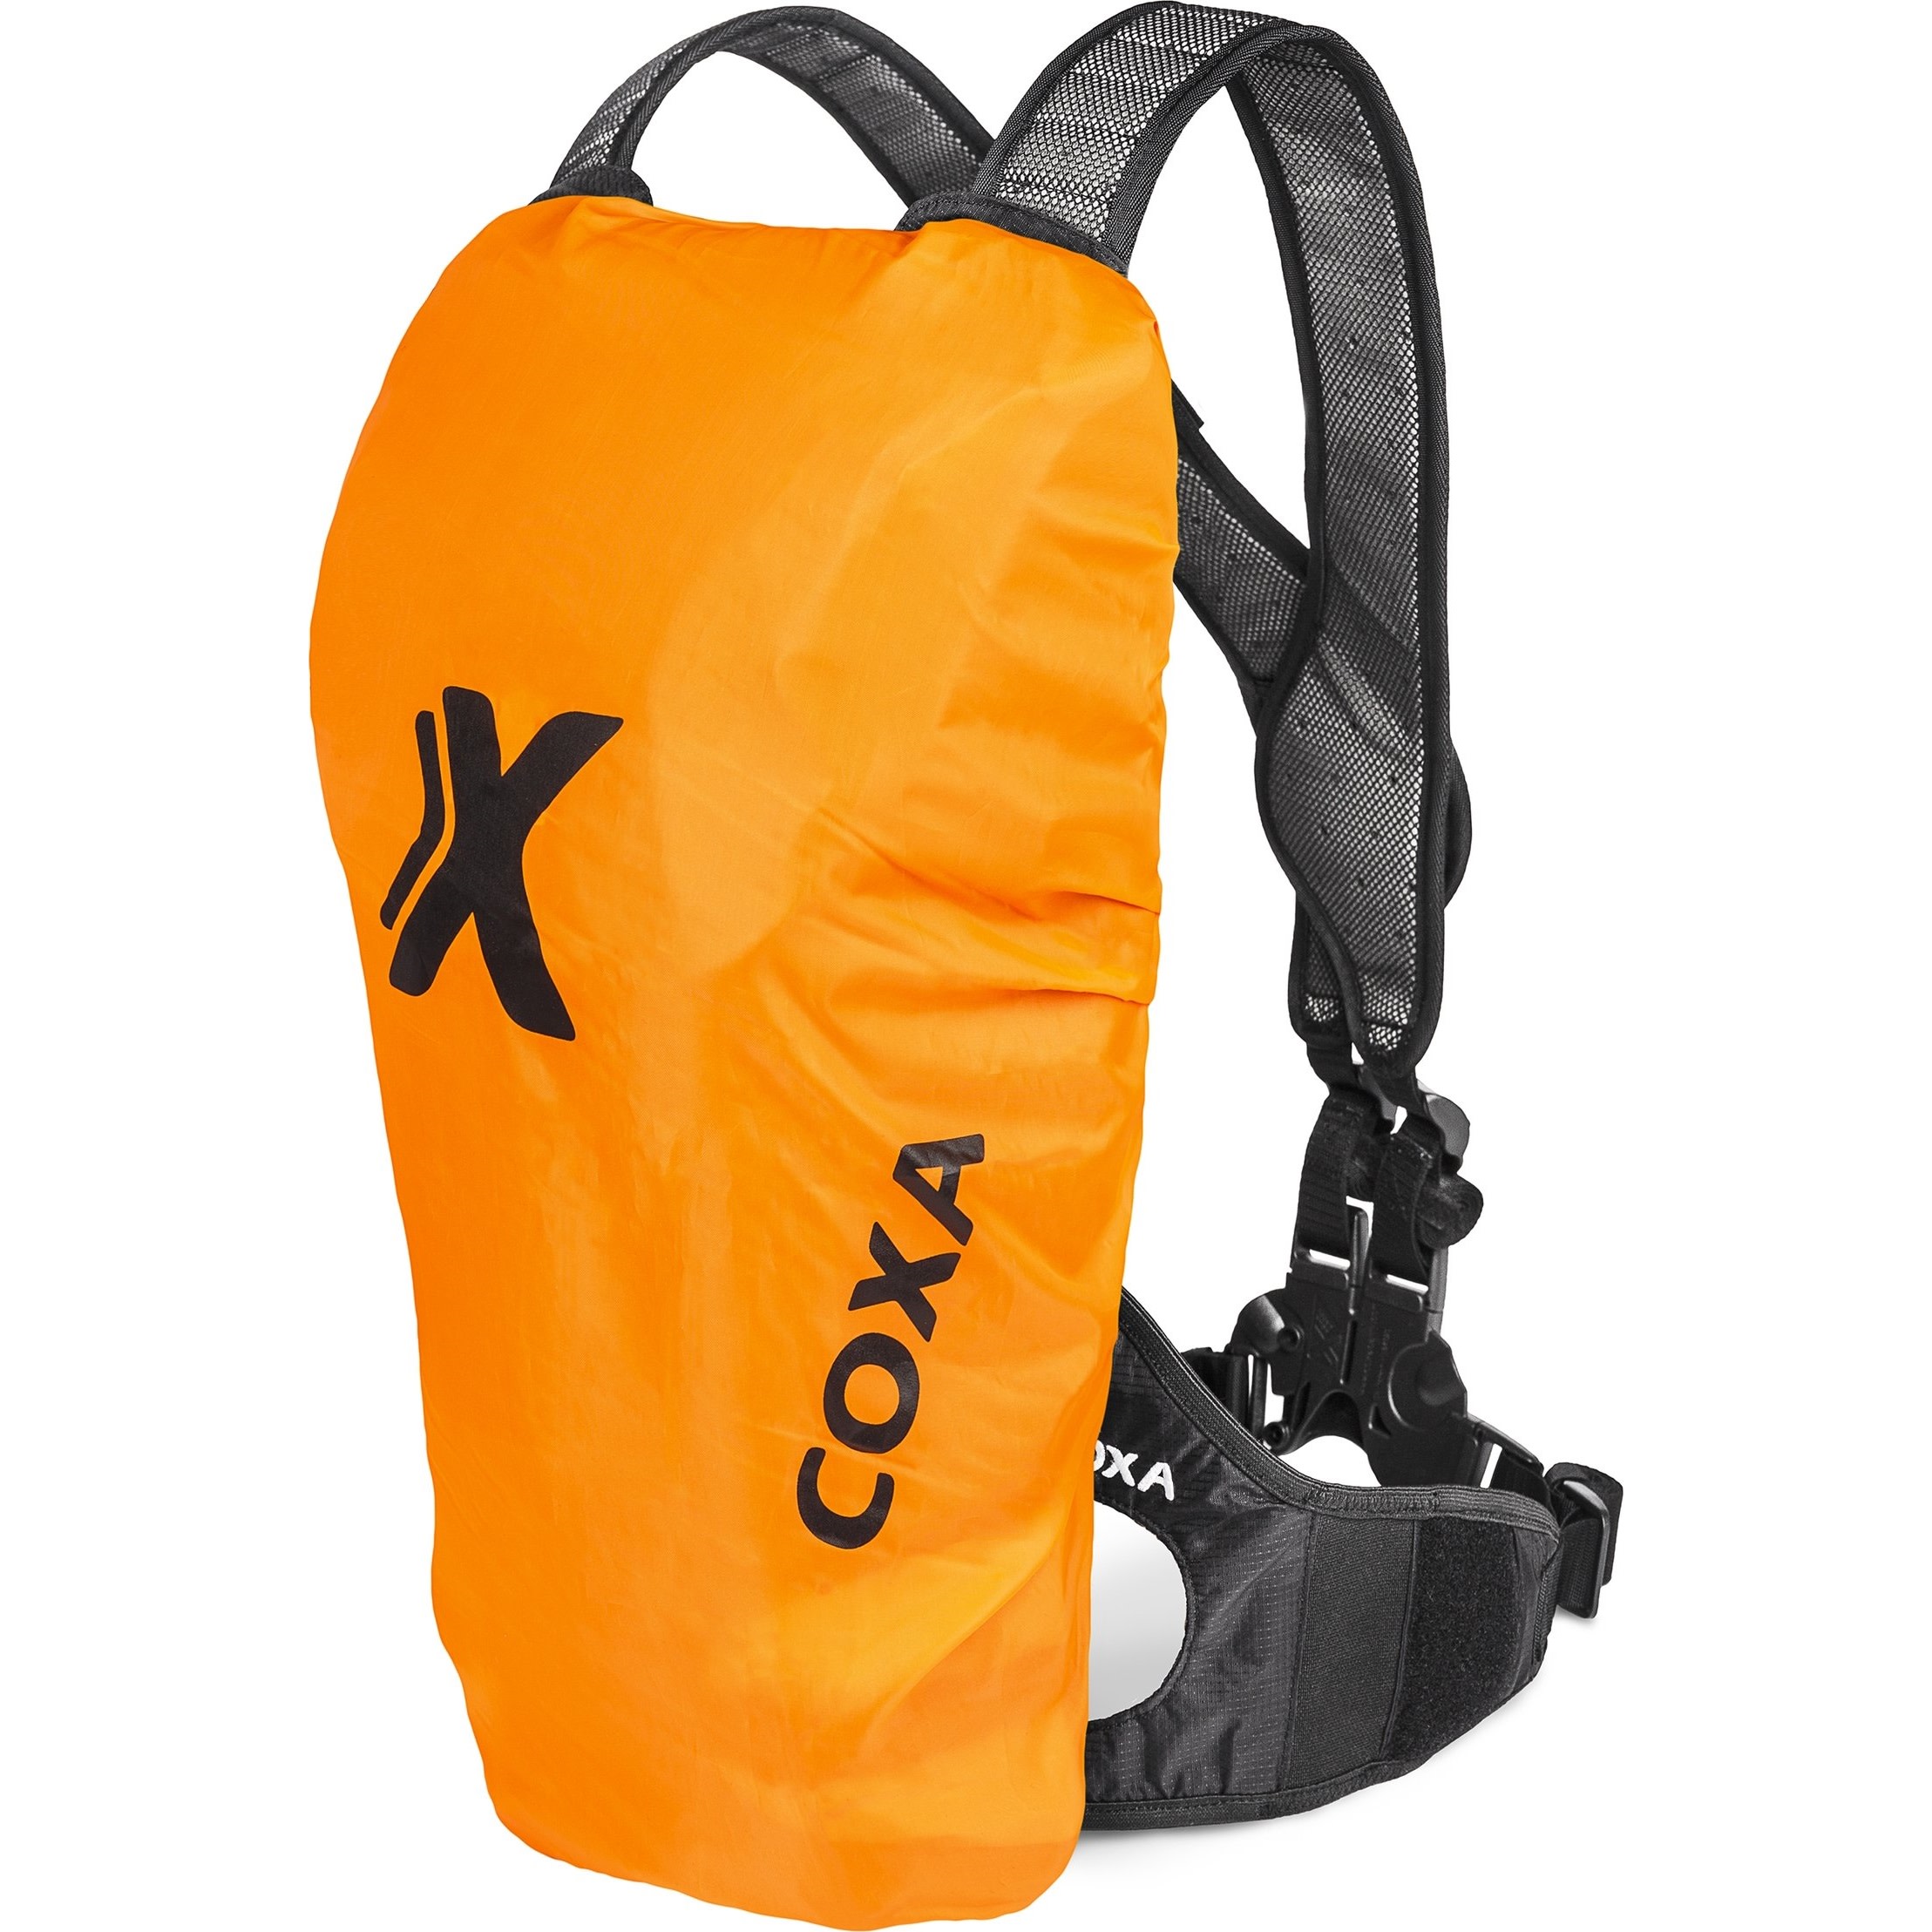 Coxa Carry Rain Cover M10 Orange